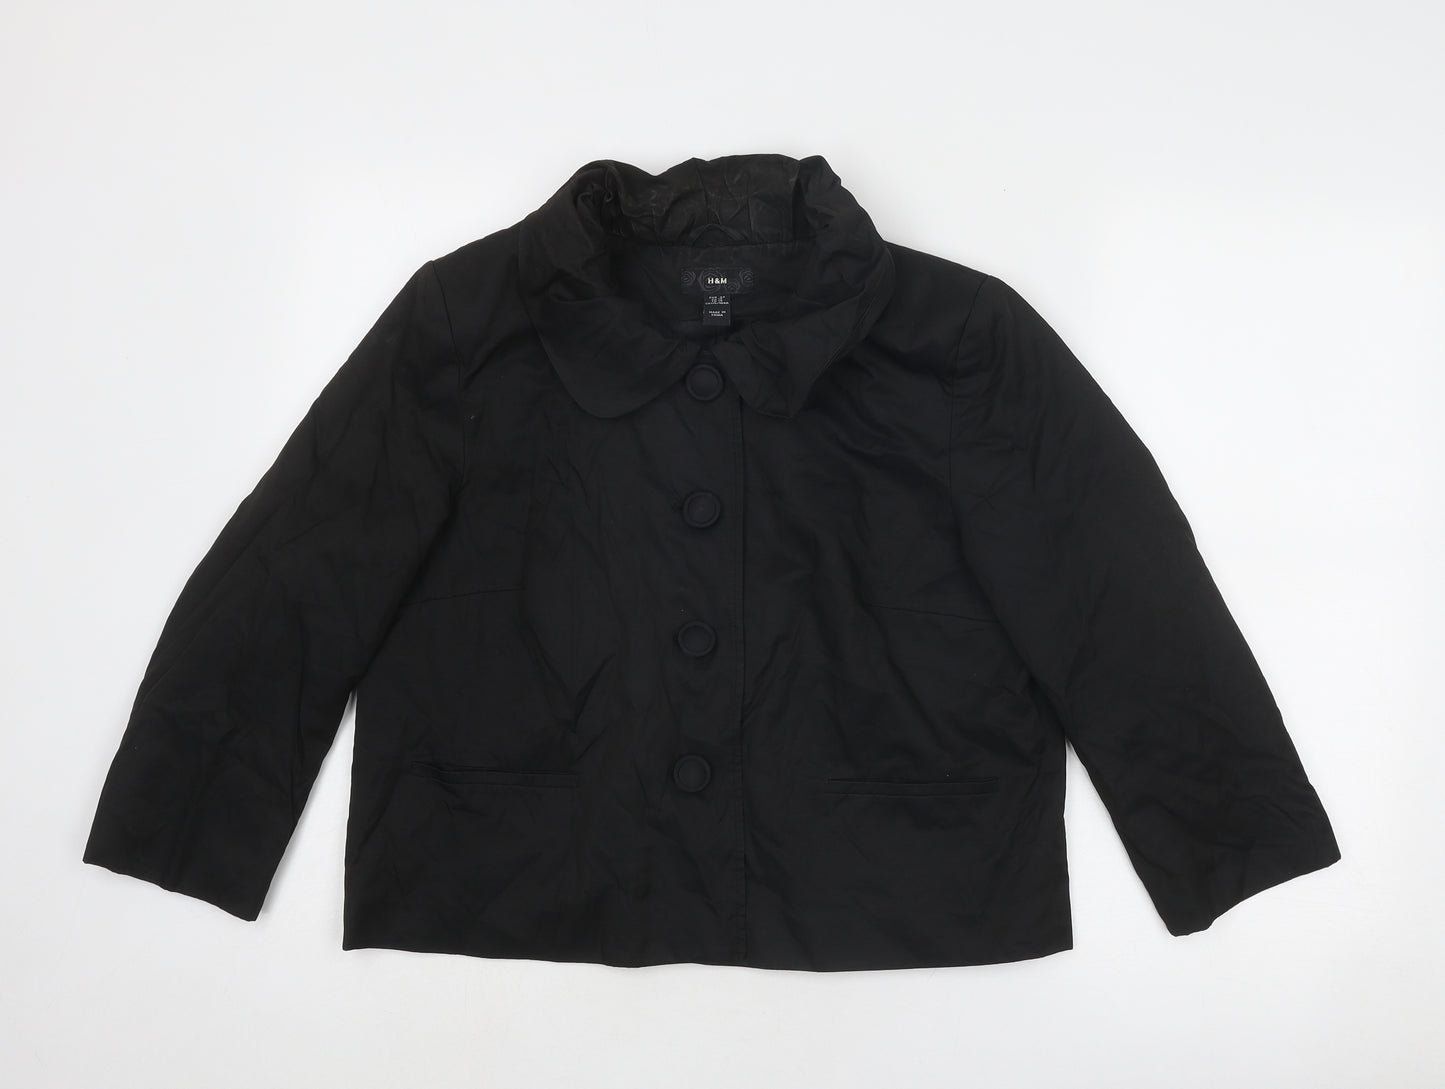 H&M Womens Black Jacket Size 18 Button